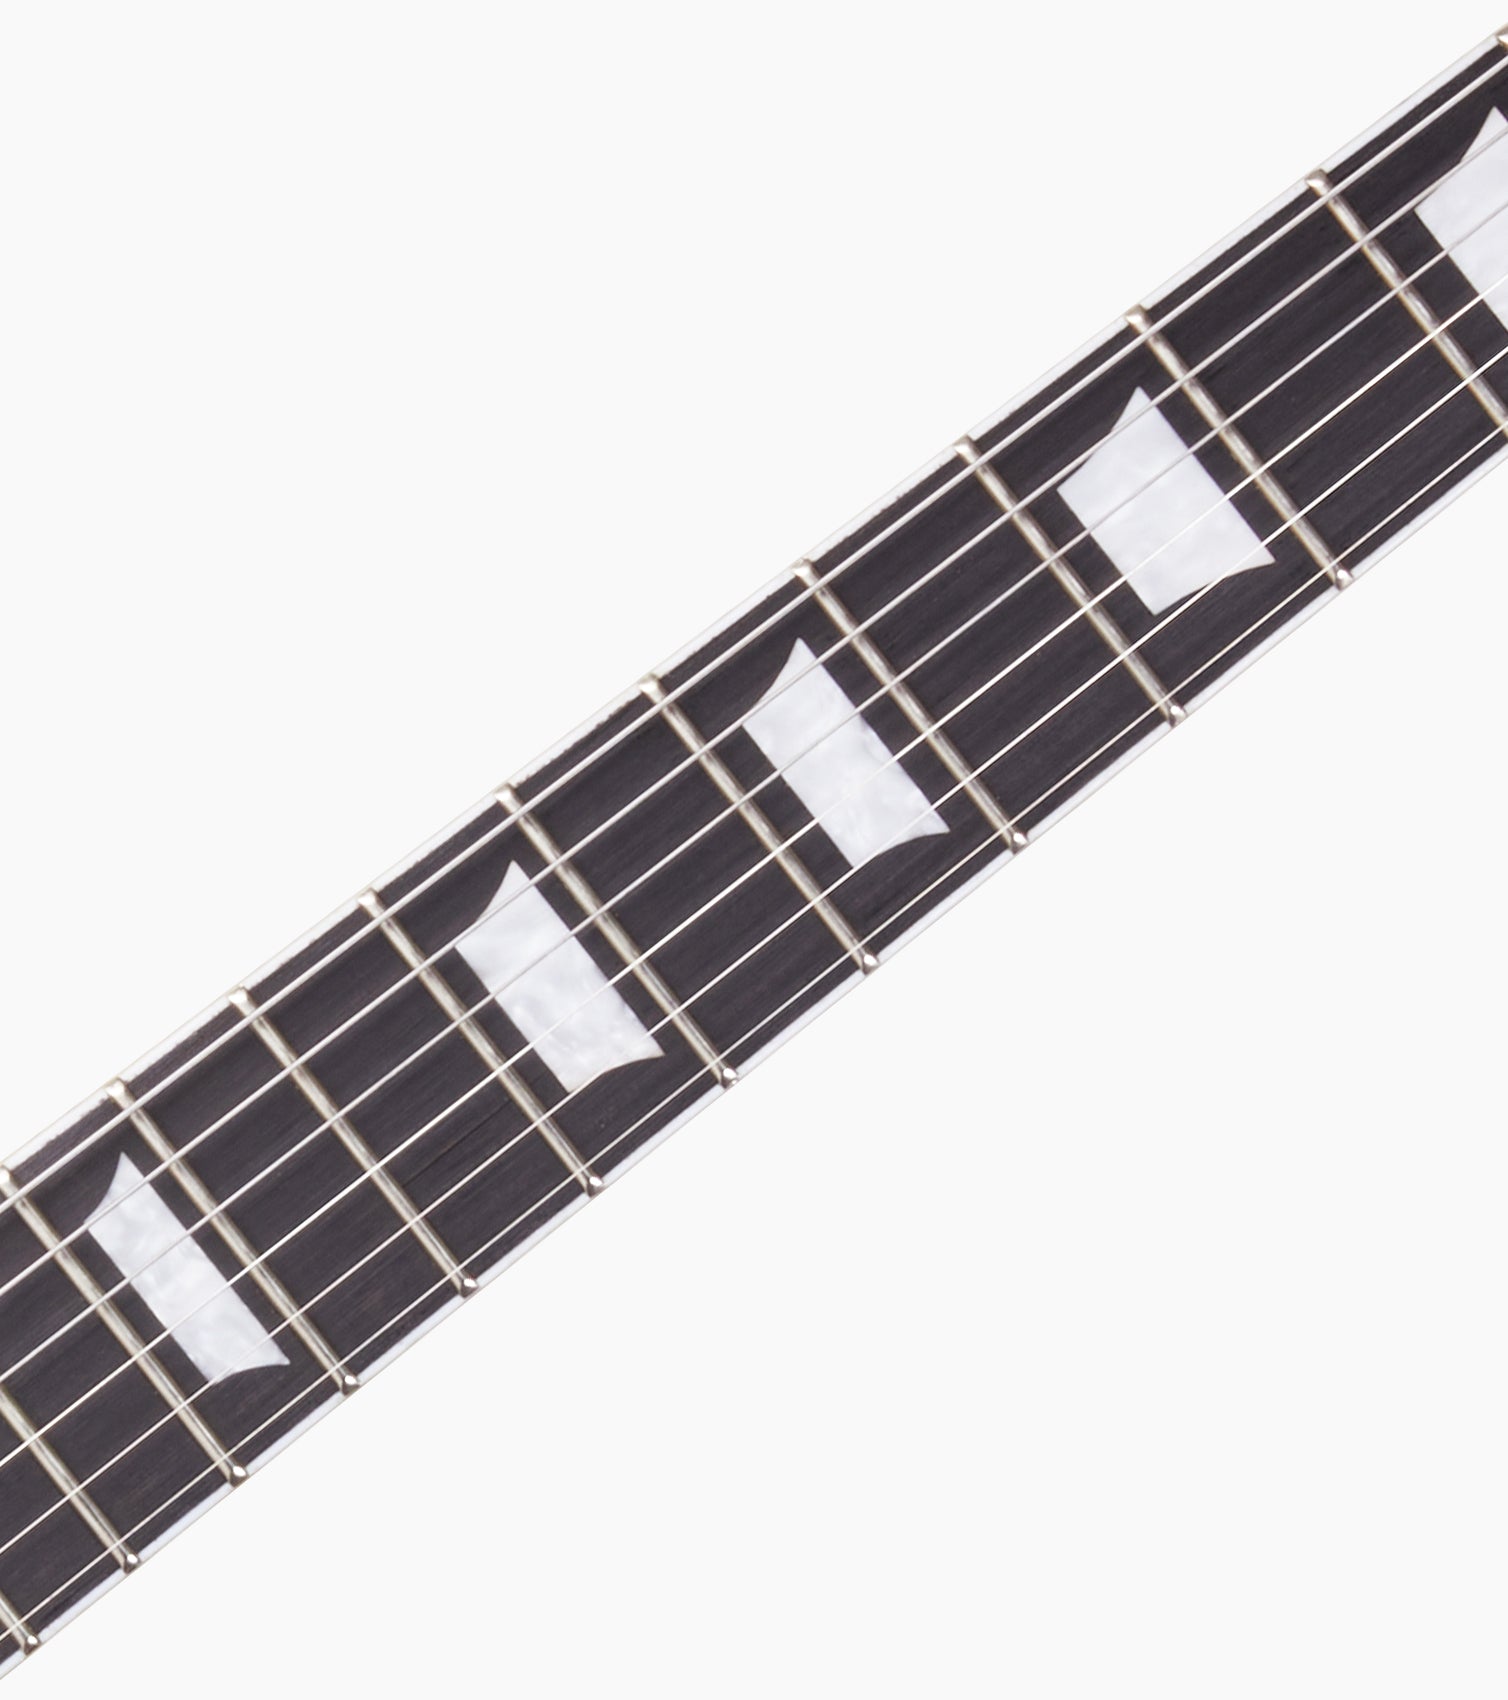 close-up of Sunburst Left Handed les paul inspired electric guitar fretboard